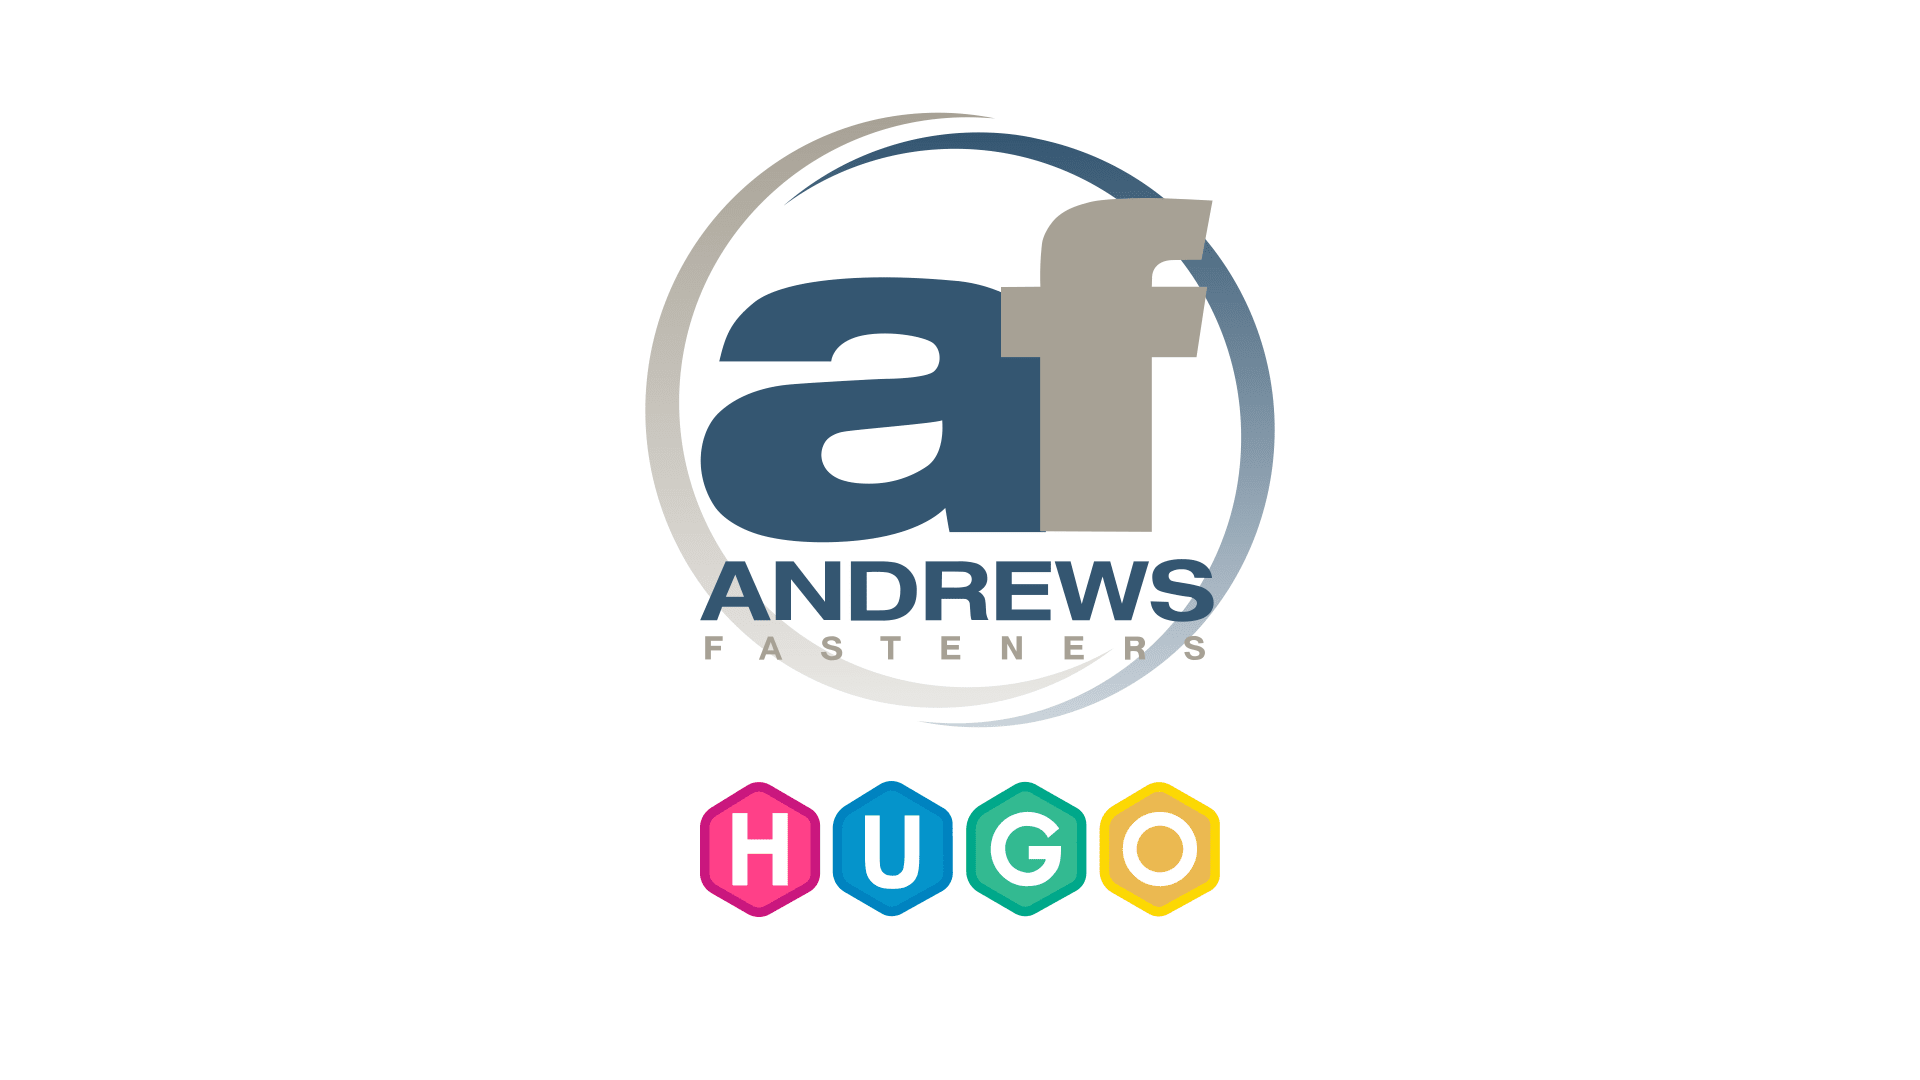 Andrews Fasteners going Hugo!